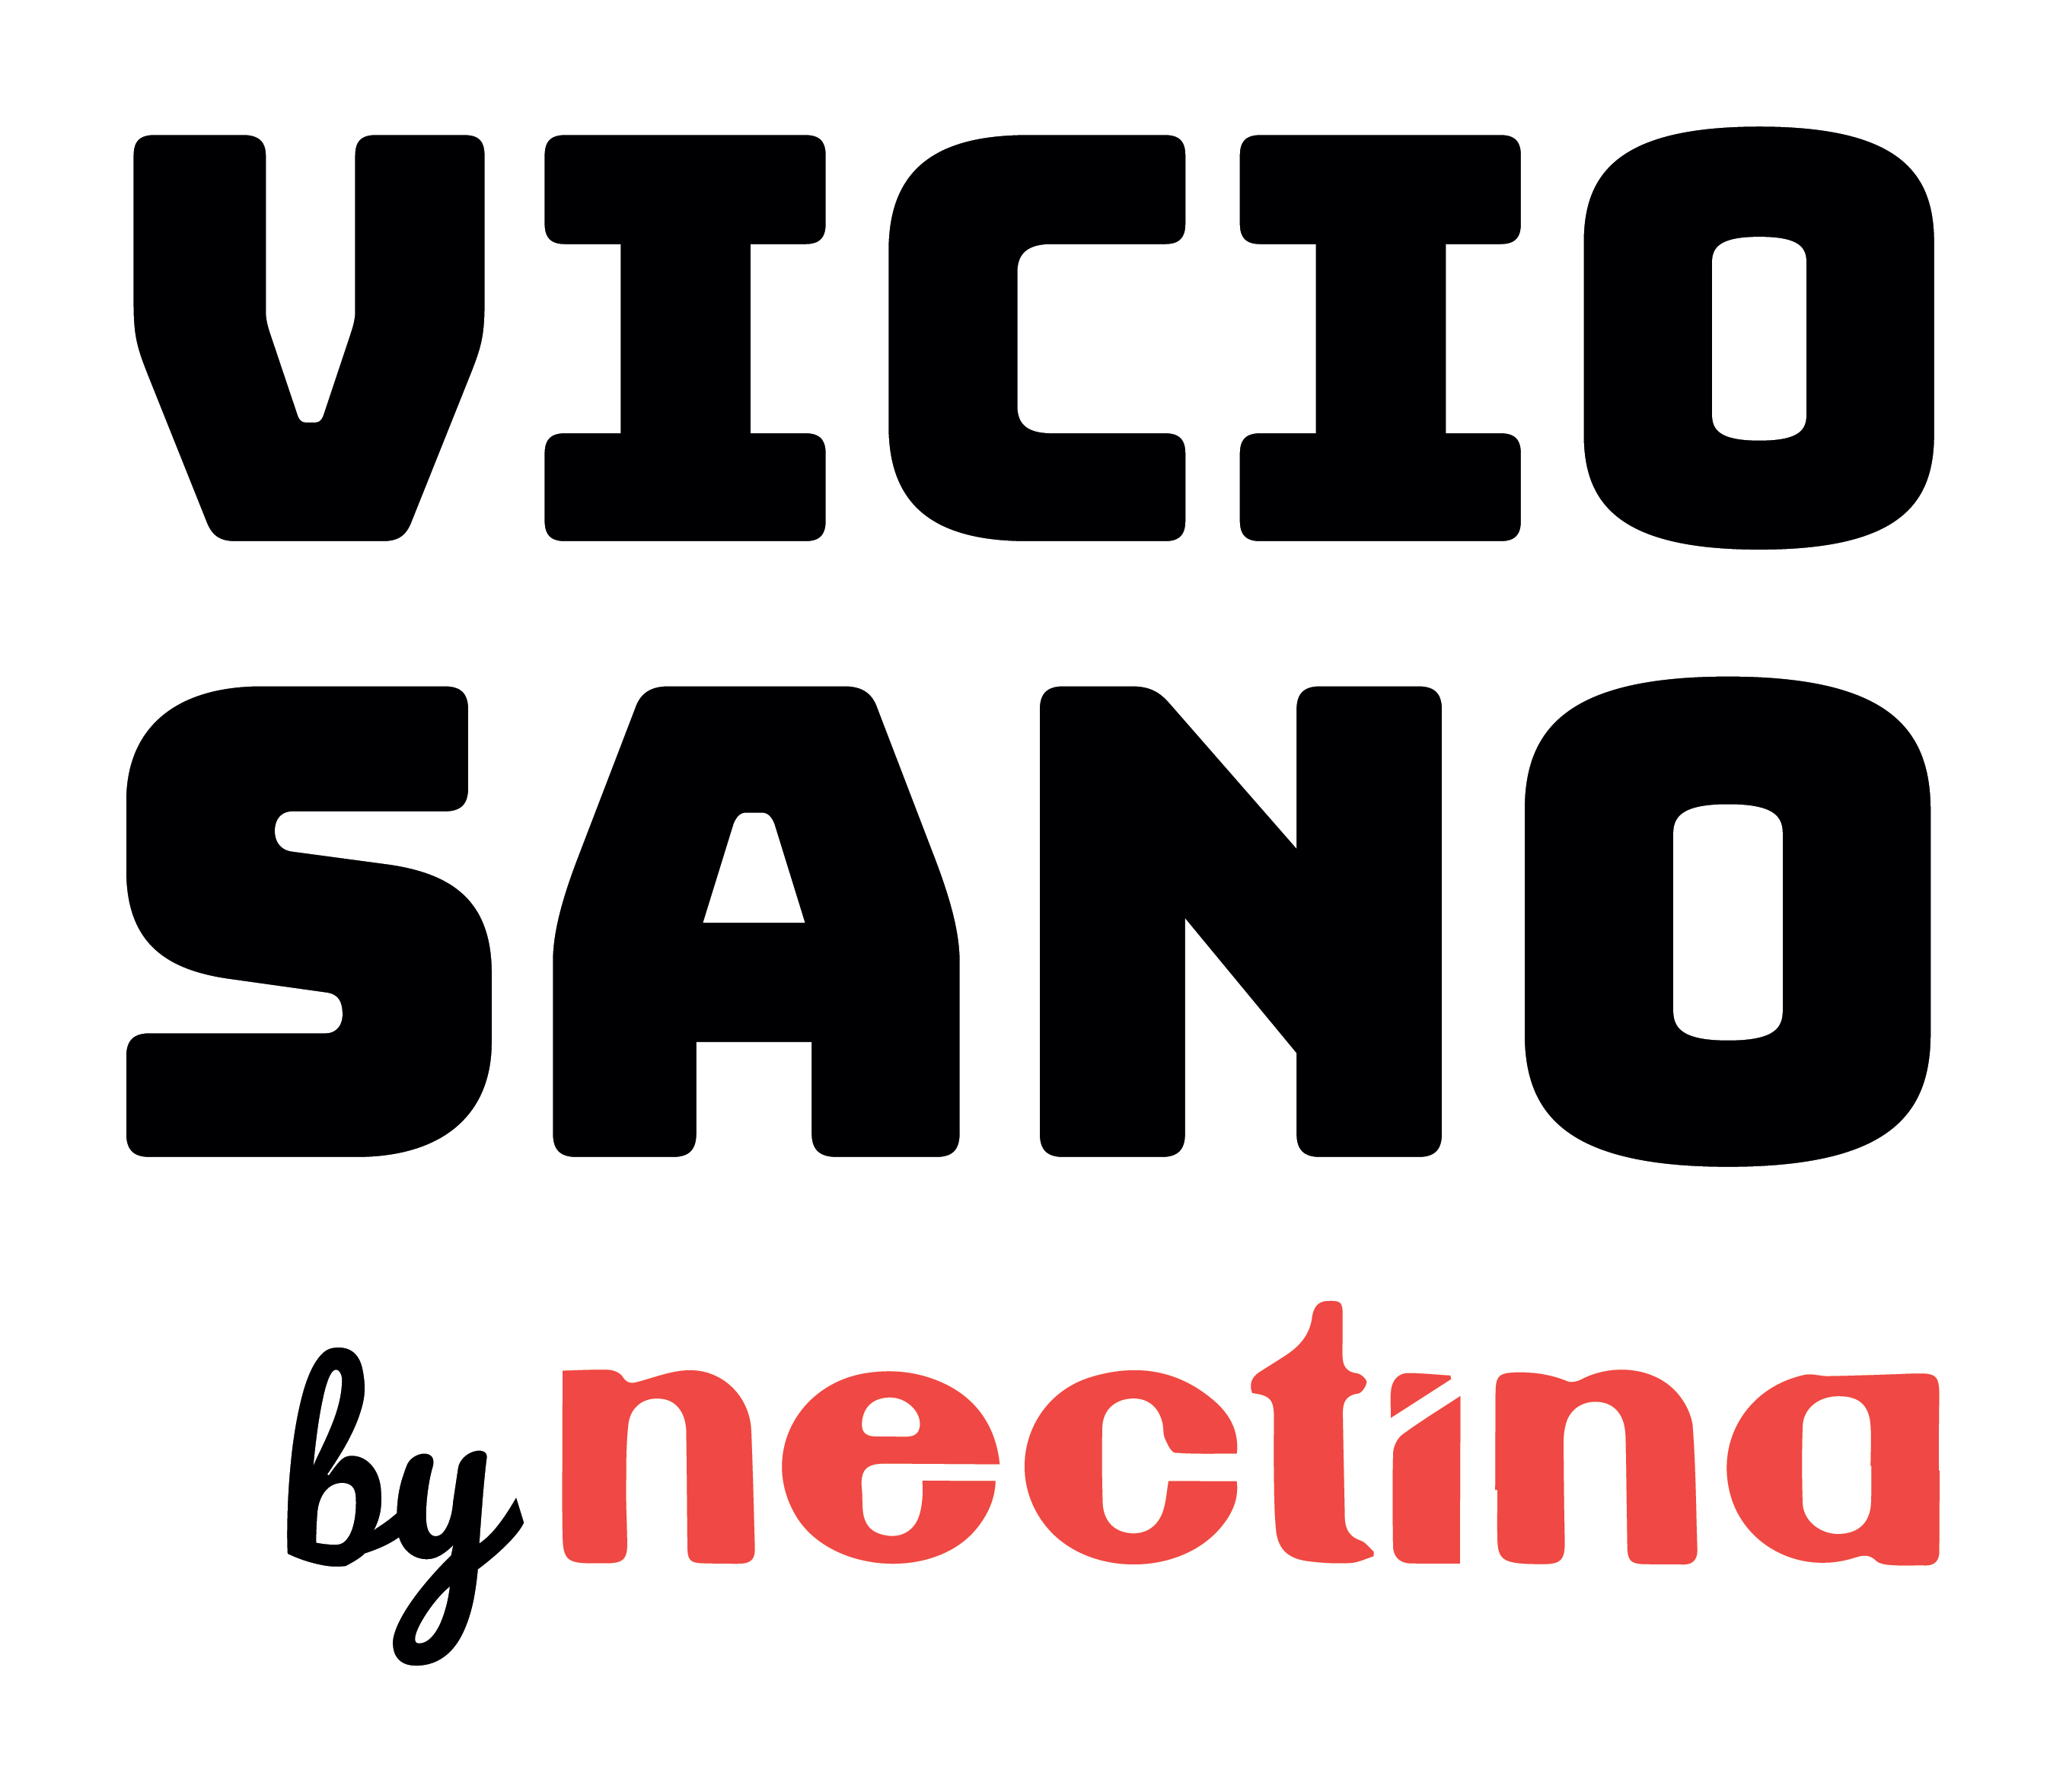 logotipo-nectina-VICIO-SANO